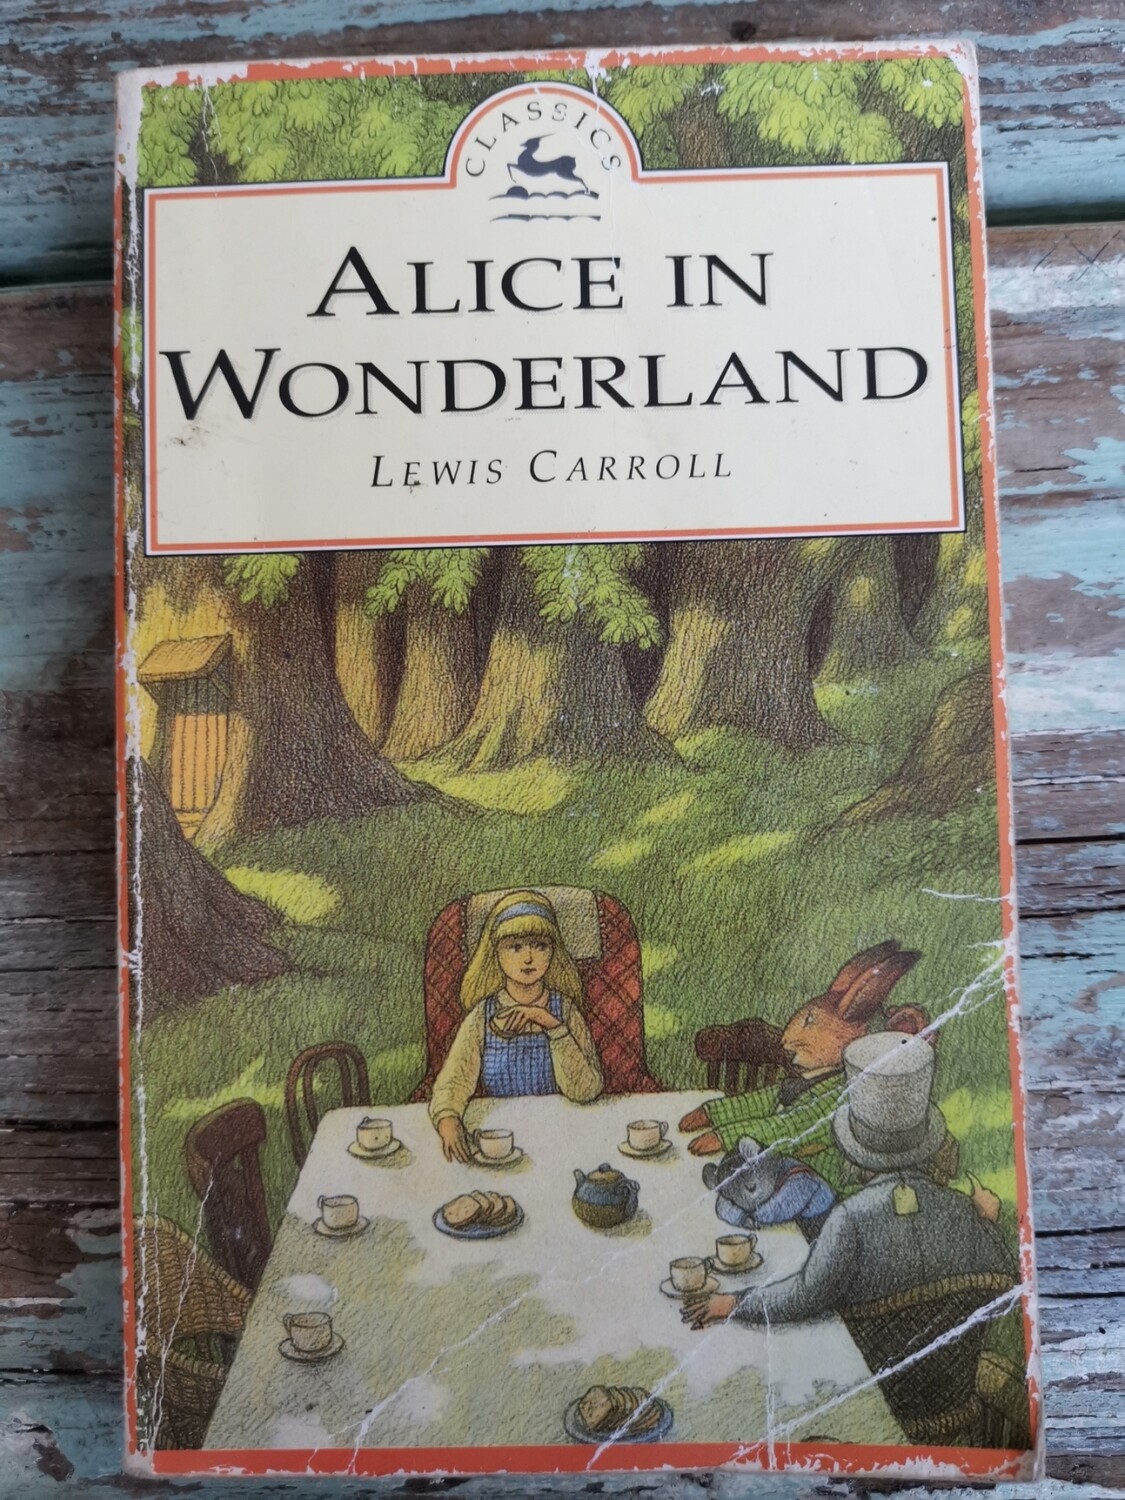 Alice in wonderland, Lewis Caroll